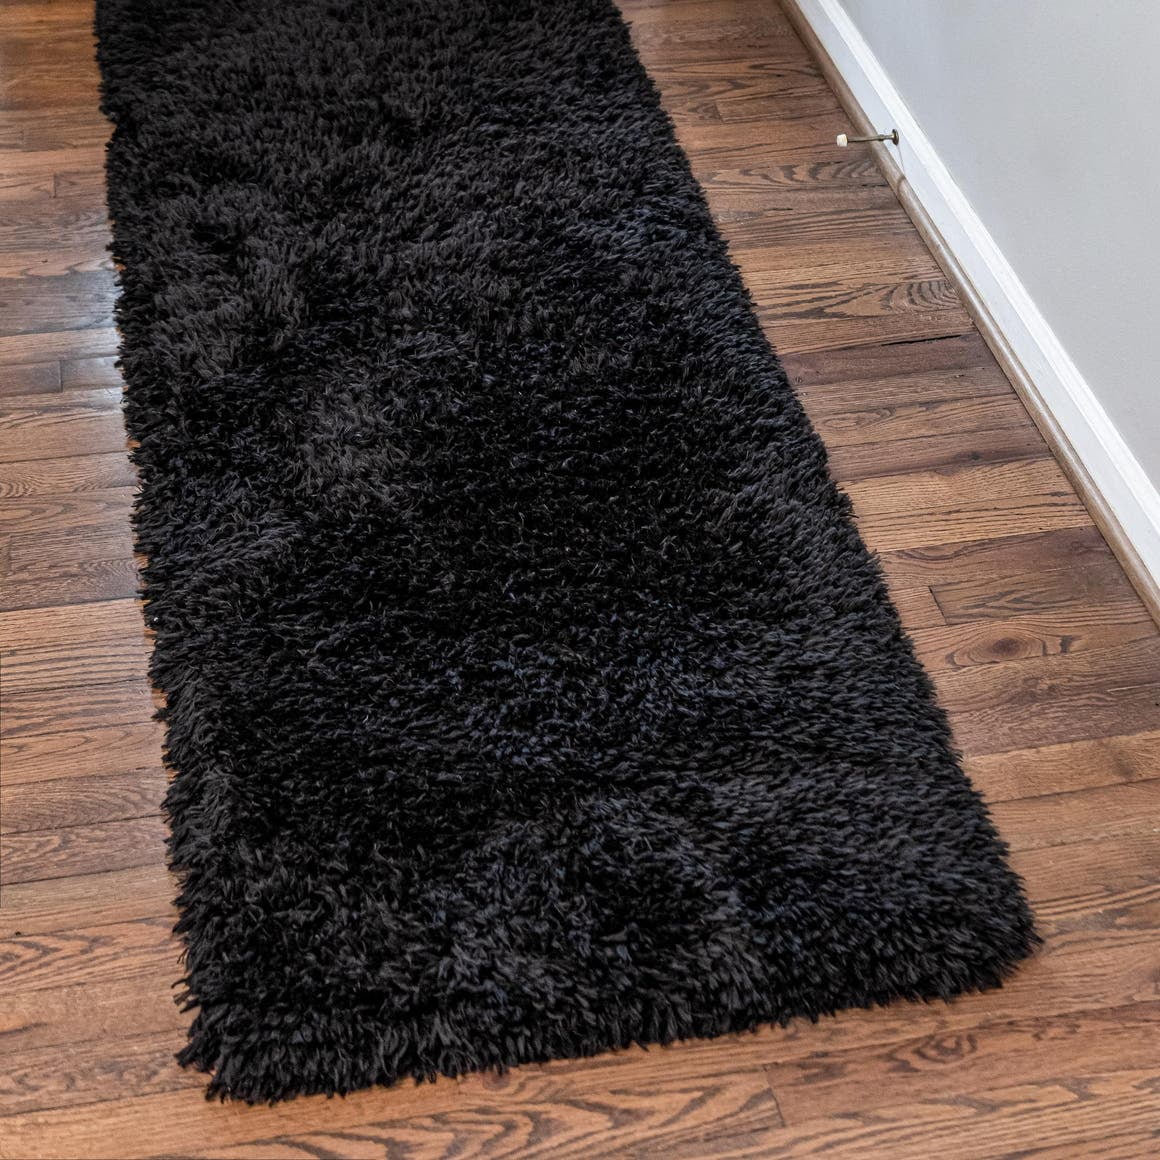 Top Quality Long Pile Rug in Plain Brown Soft Deep Pile Elegant Shaggy Carpet 